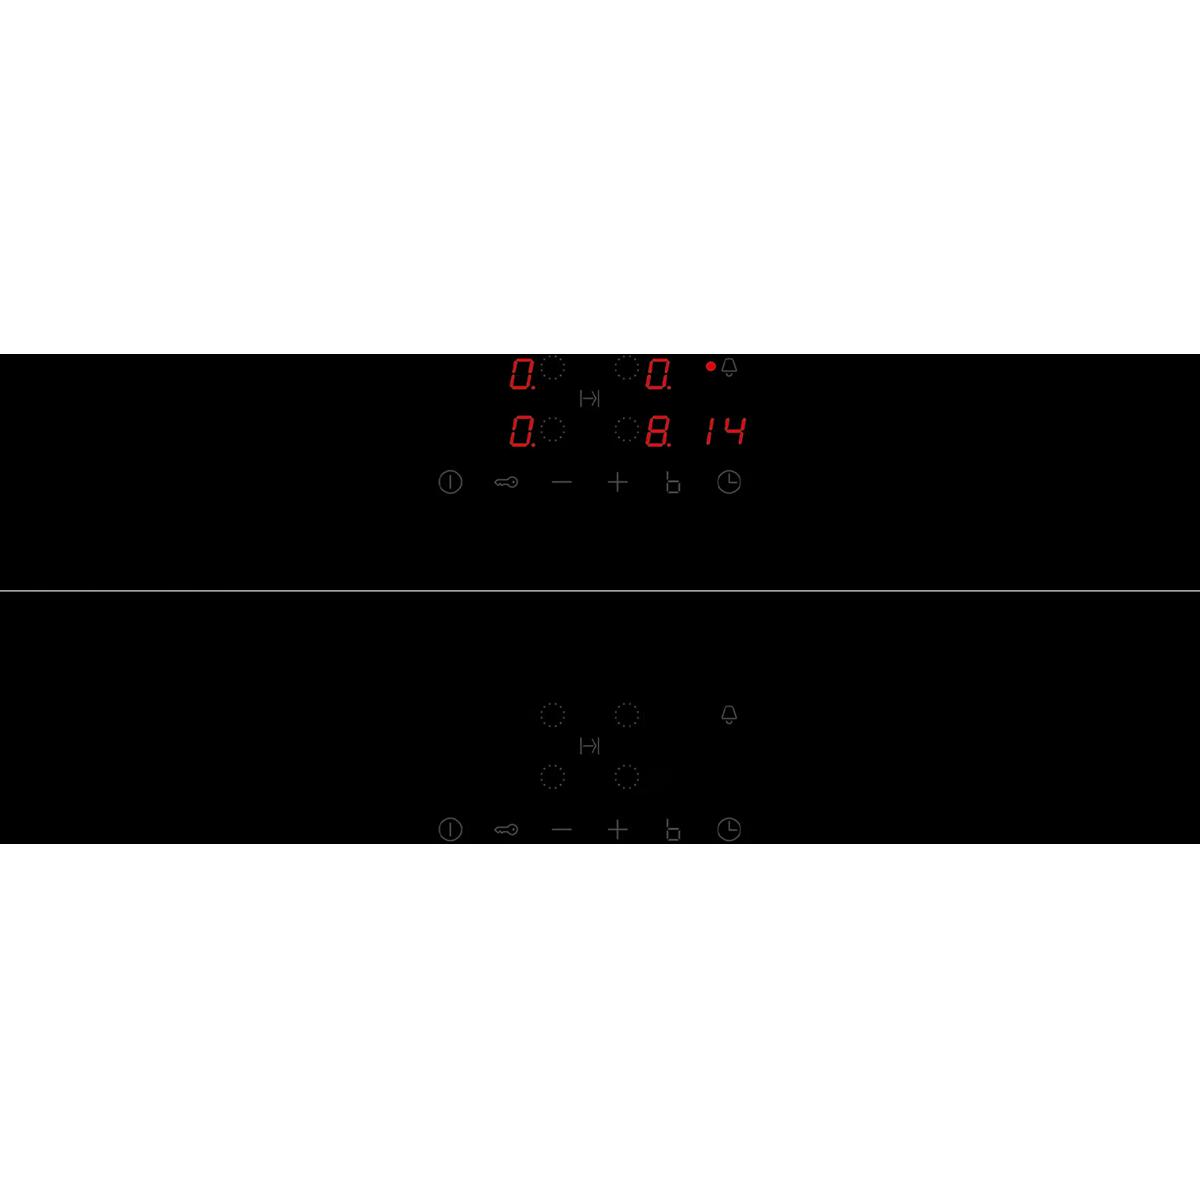 Grillfunktion, EEK:A Elektroshop +T46SBE1L0) 71L, Wagner Kindersicherung, 60 BX16I Set Induktionskochfeld, 60 schwarz mit cm breit, Kochfeld breit, (B1DCA0AN0 Backofen cm Neff